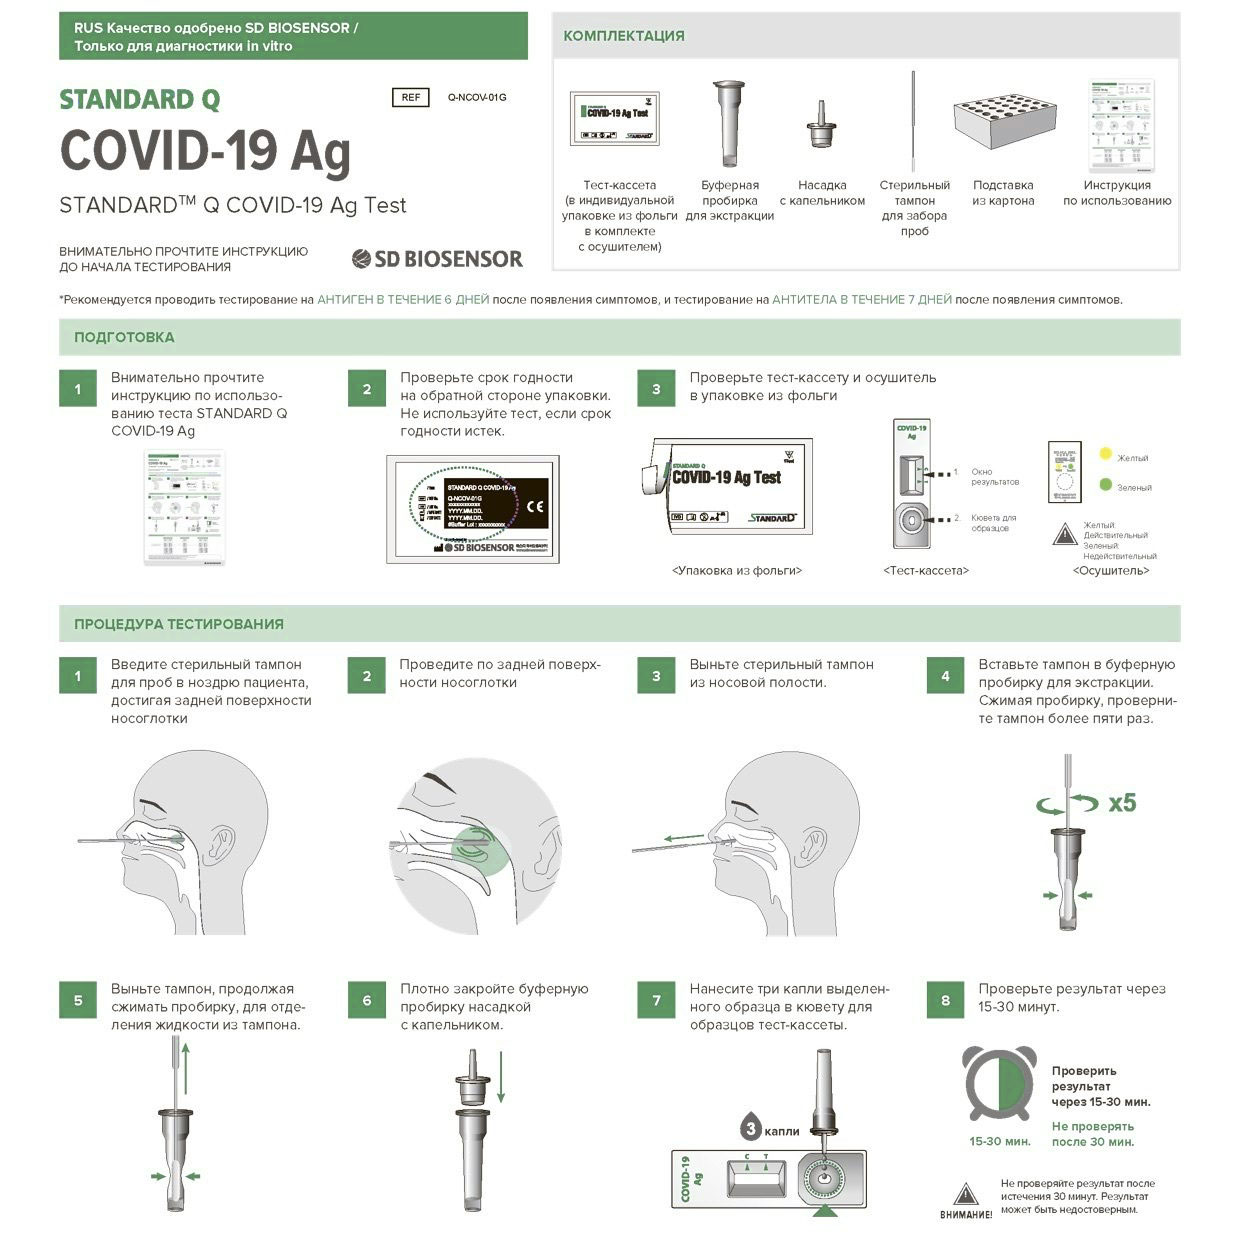 Результаты теста covid. Инструкция по экспресс тесту на ковид Covid-19. Тест на ковид Covid-19 AG инструкция. Показания экспресс теста на ковид19. Экспресс-тест на коронавирус Covid-19.